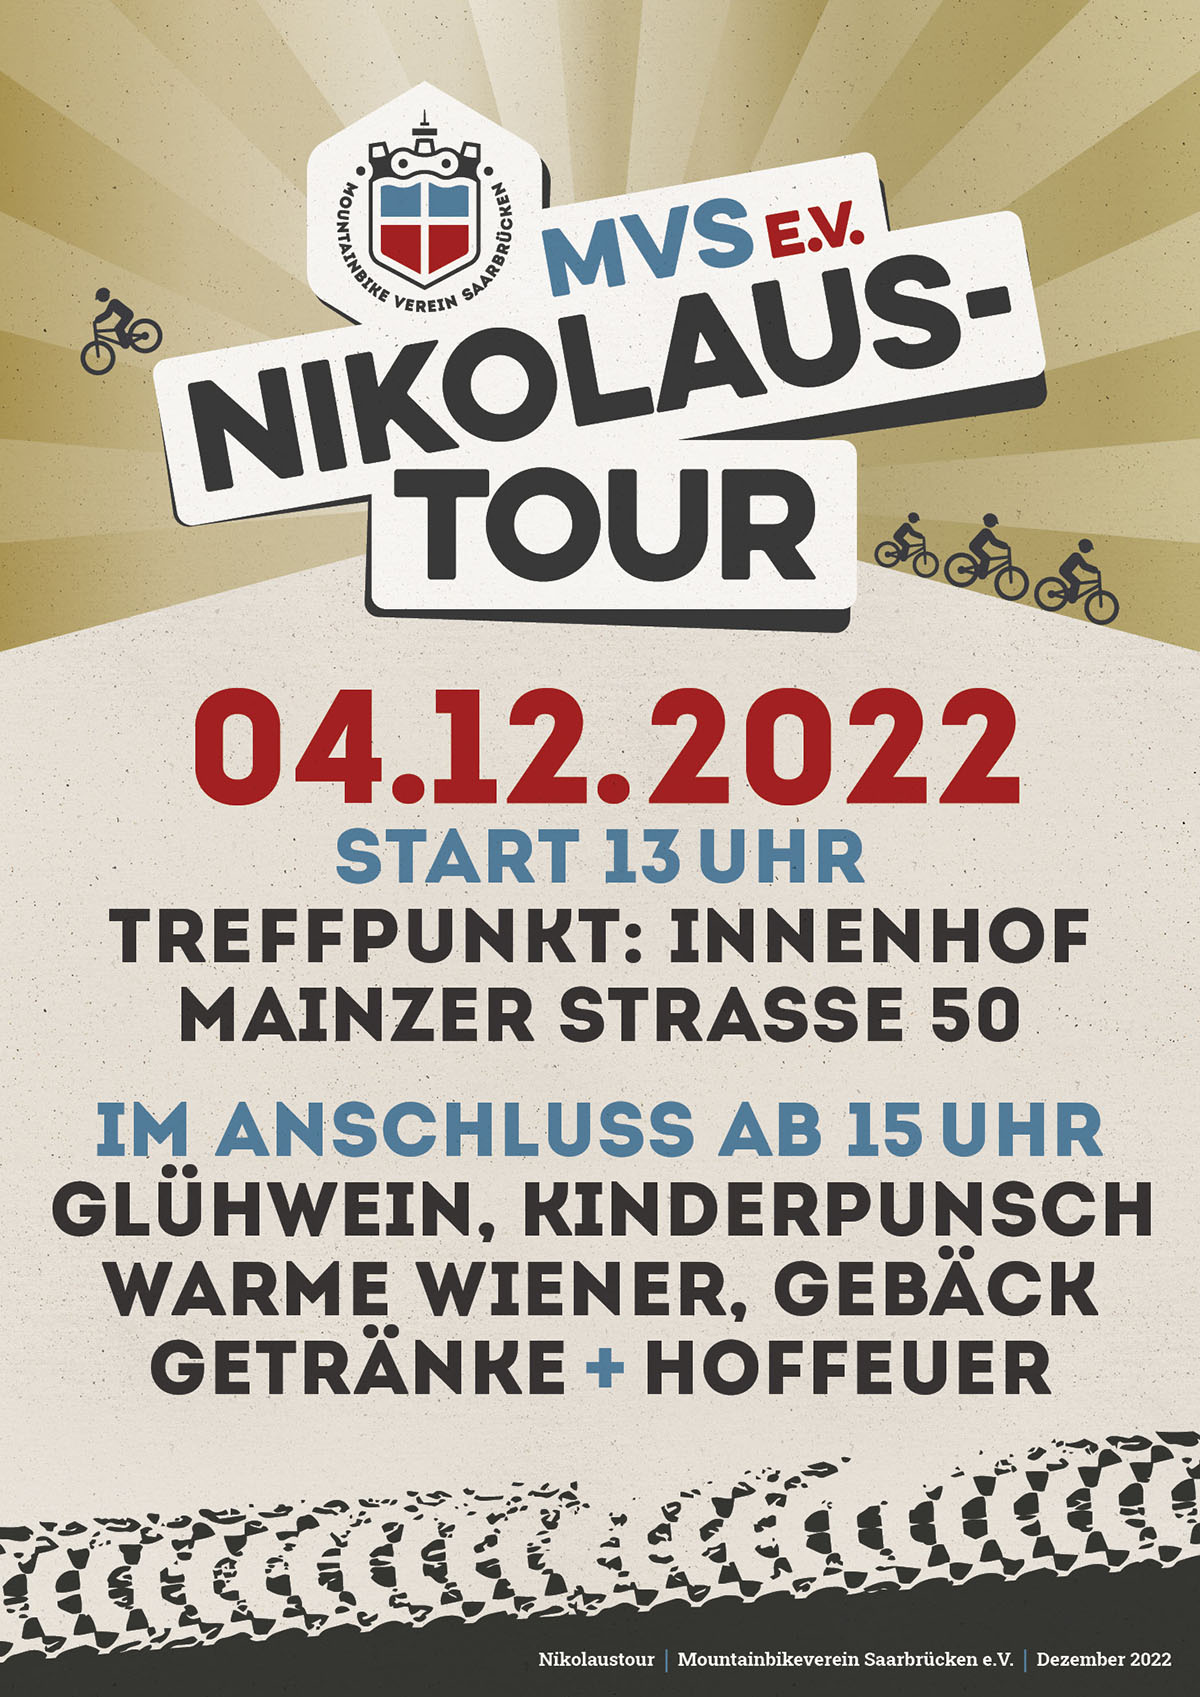 Die Nikolaustour des MVS e.V. startet am 04.12.2022 um 13 Uhr im Innenhof Mainzer Straße 50